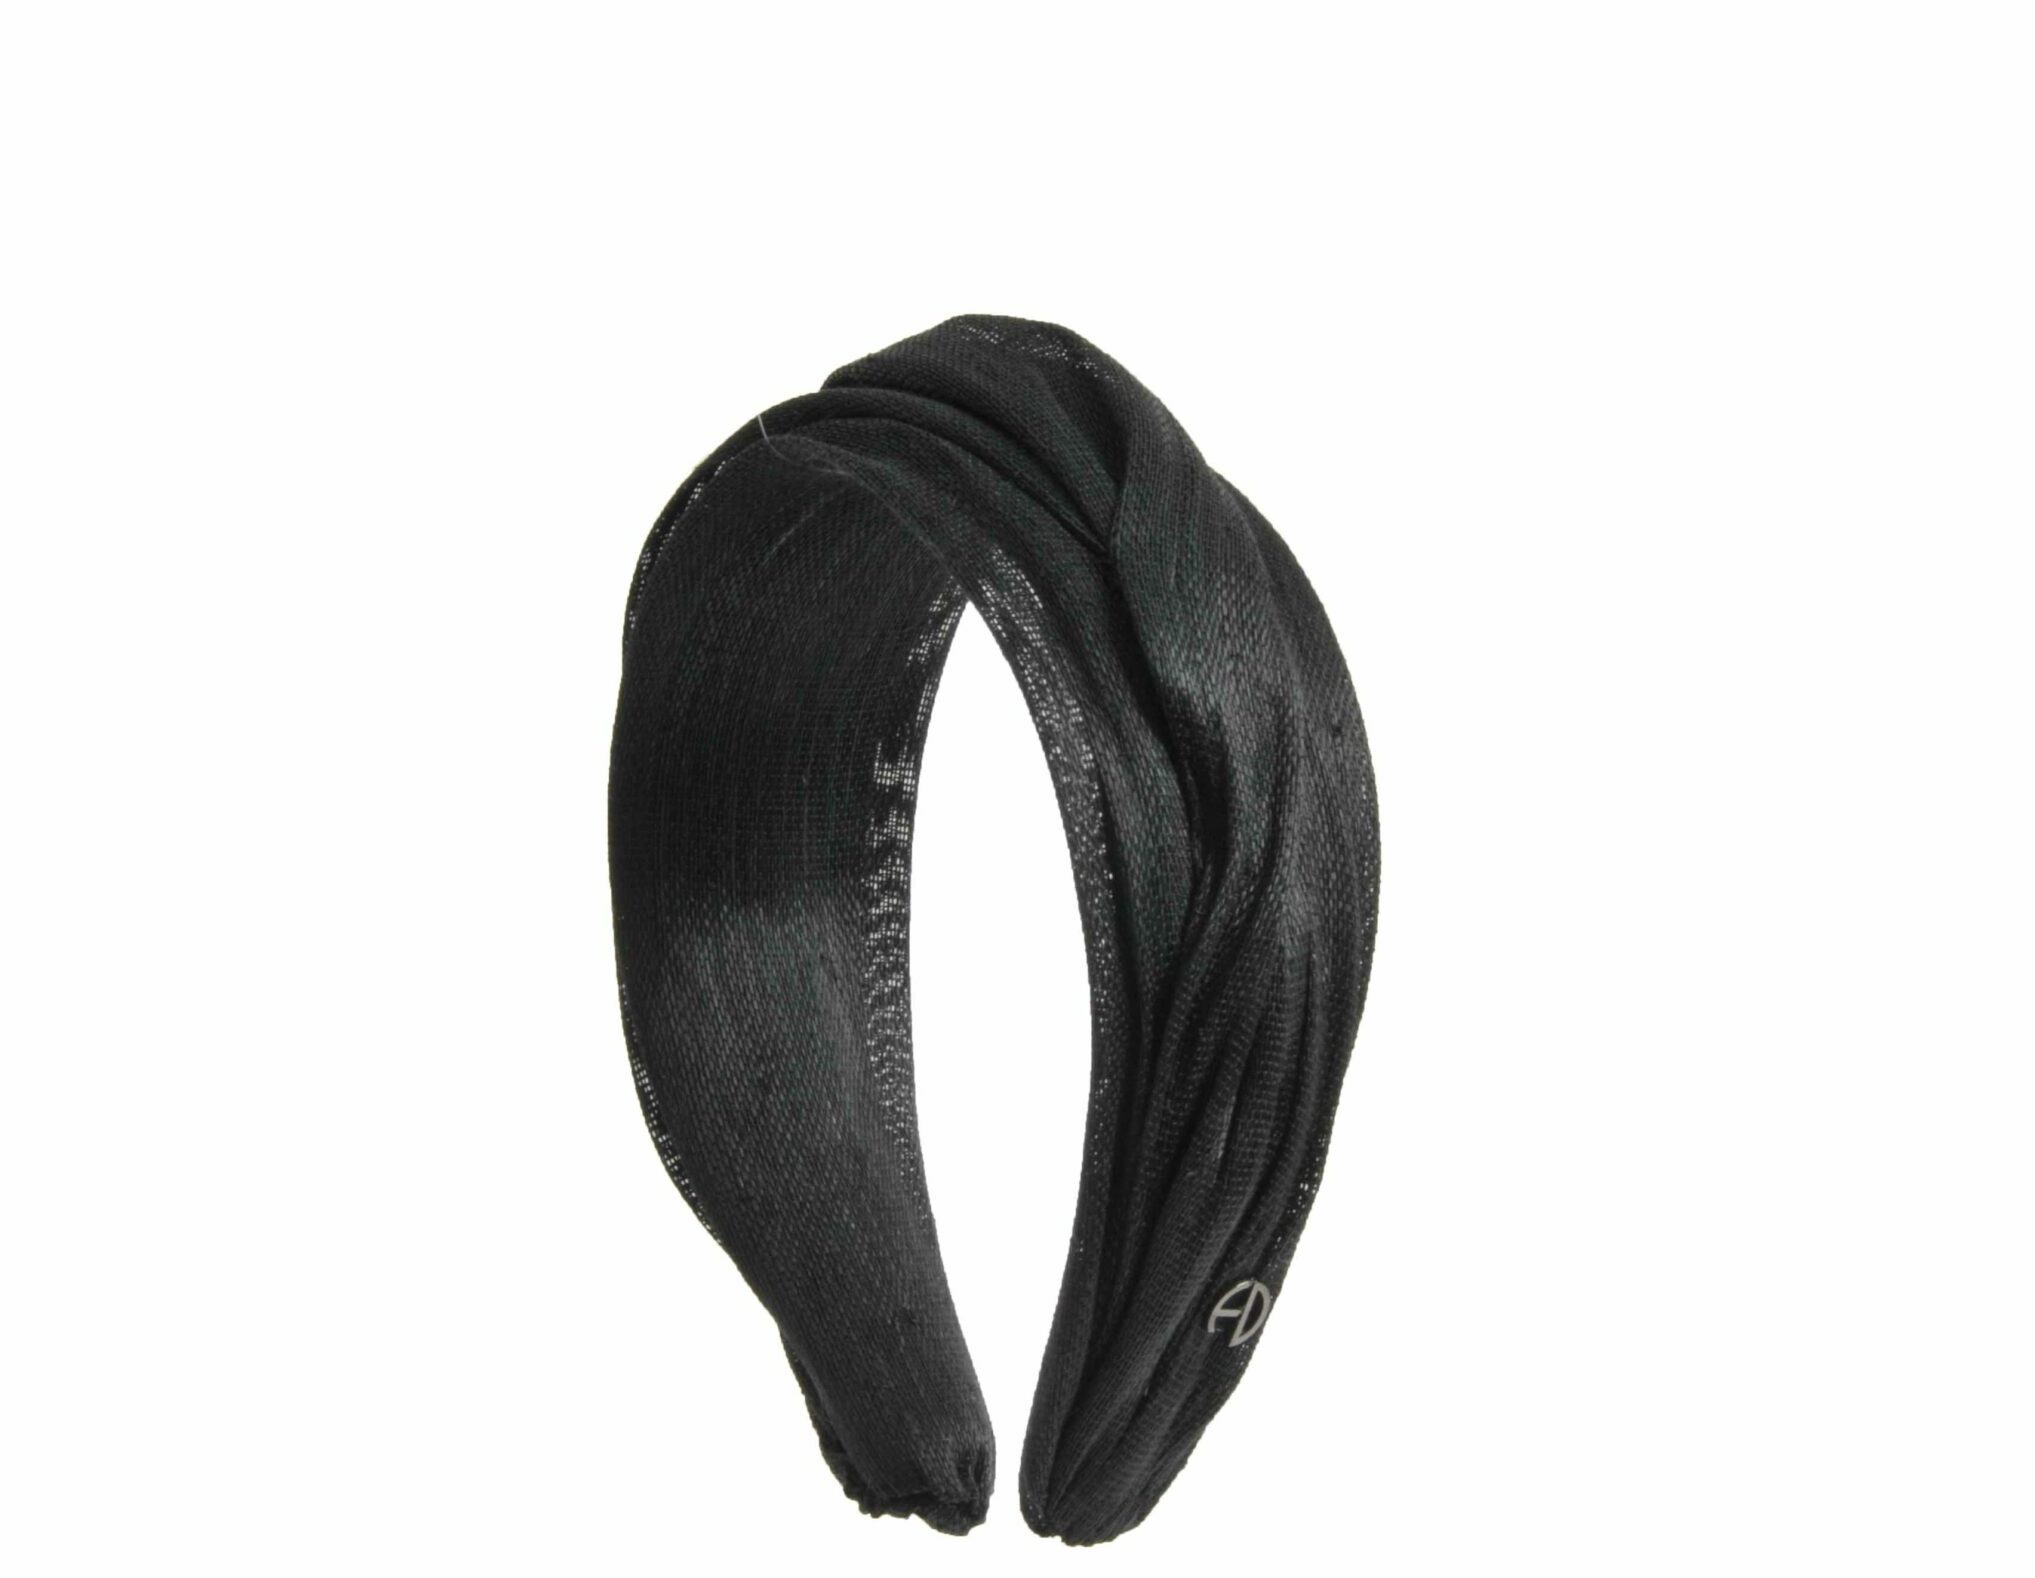 Florence headband black banana fiber - Maison Fabienne Delvigne